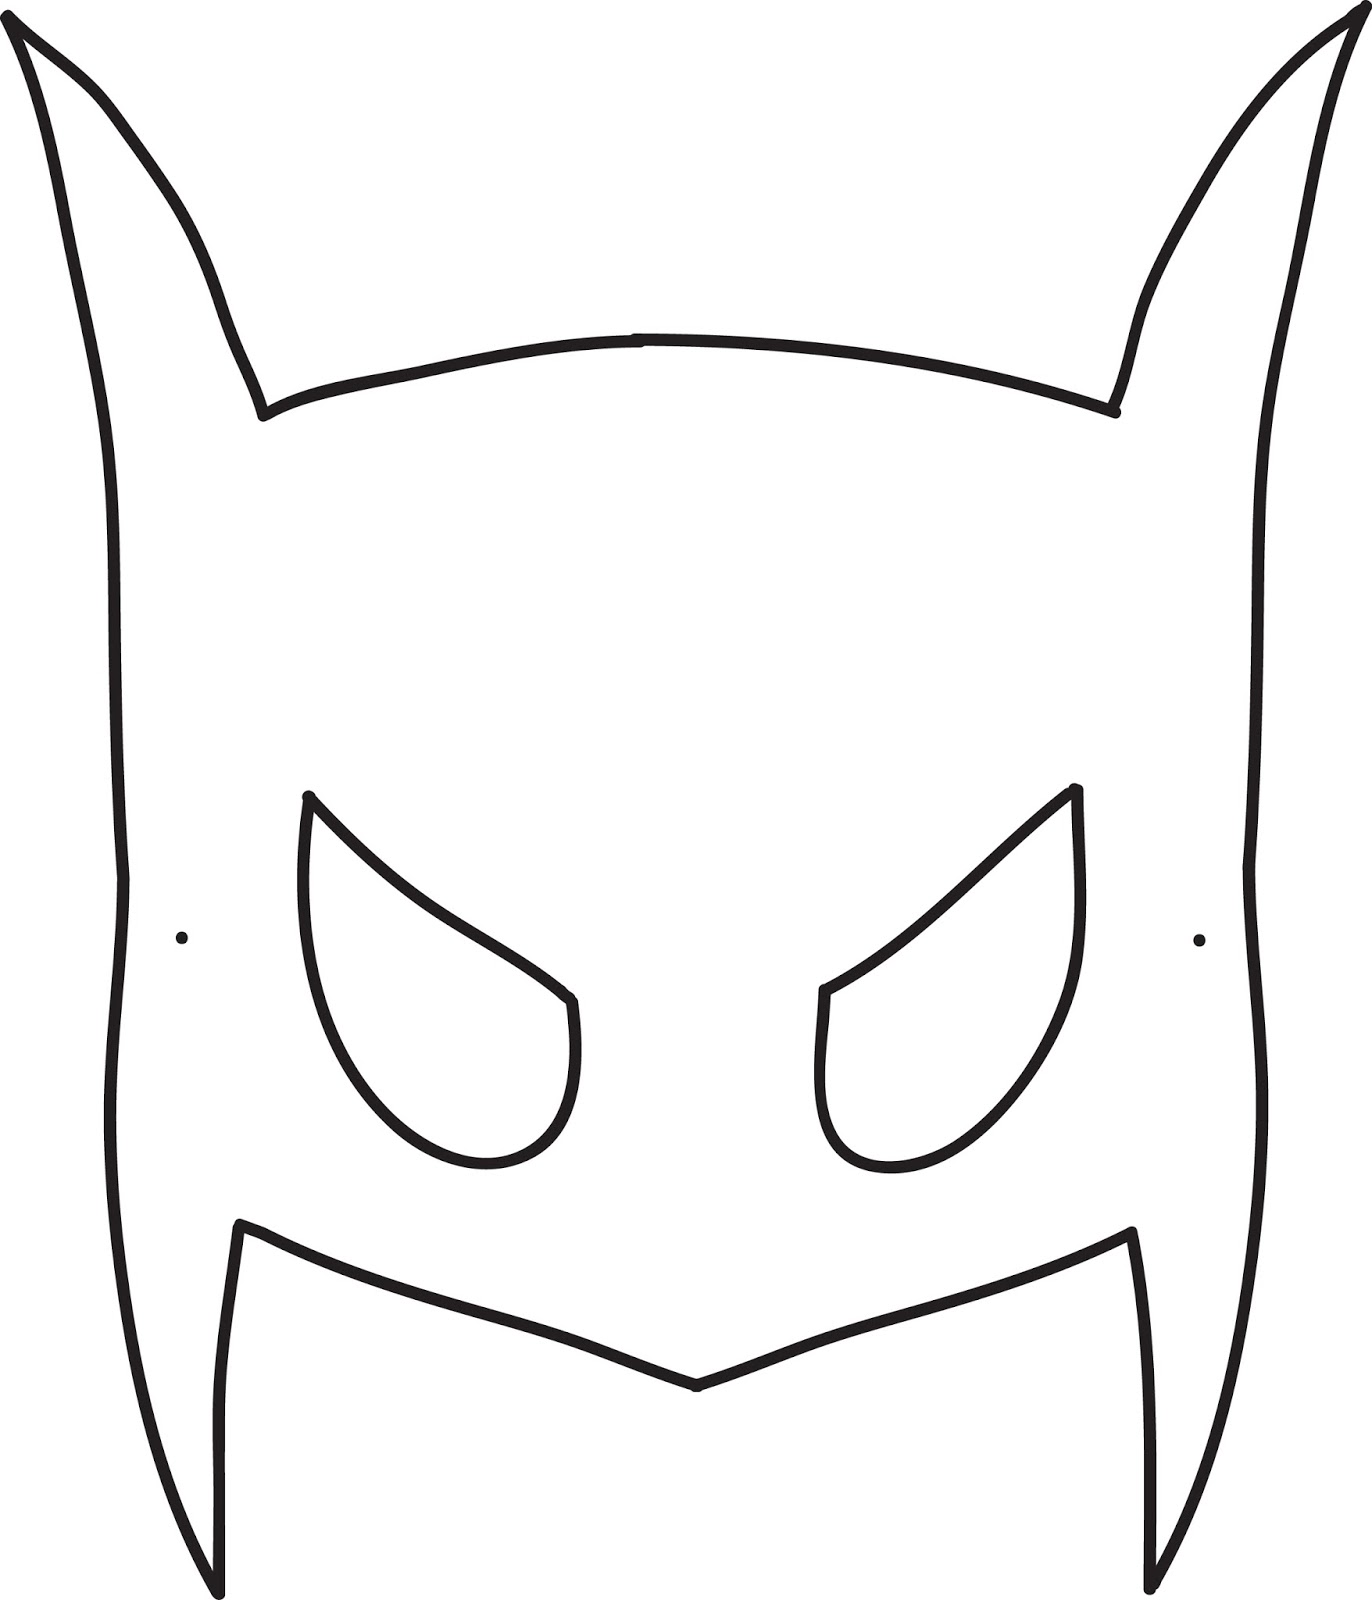 Batman Mask Template | doliquid